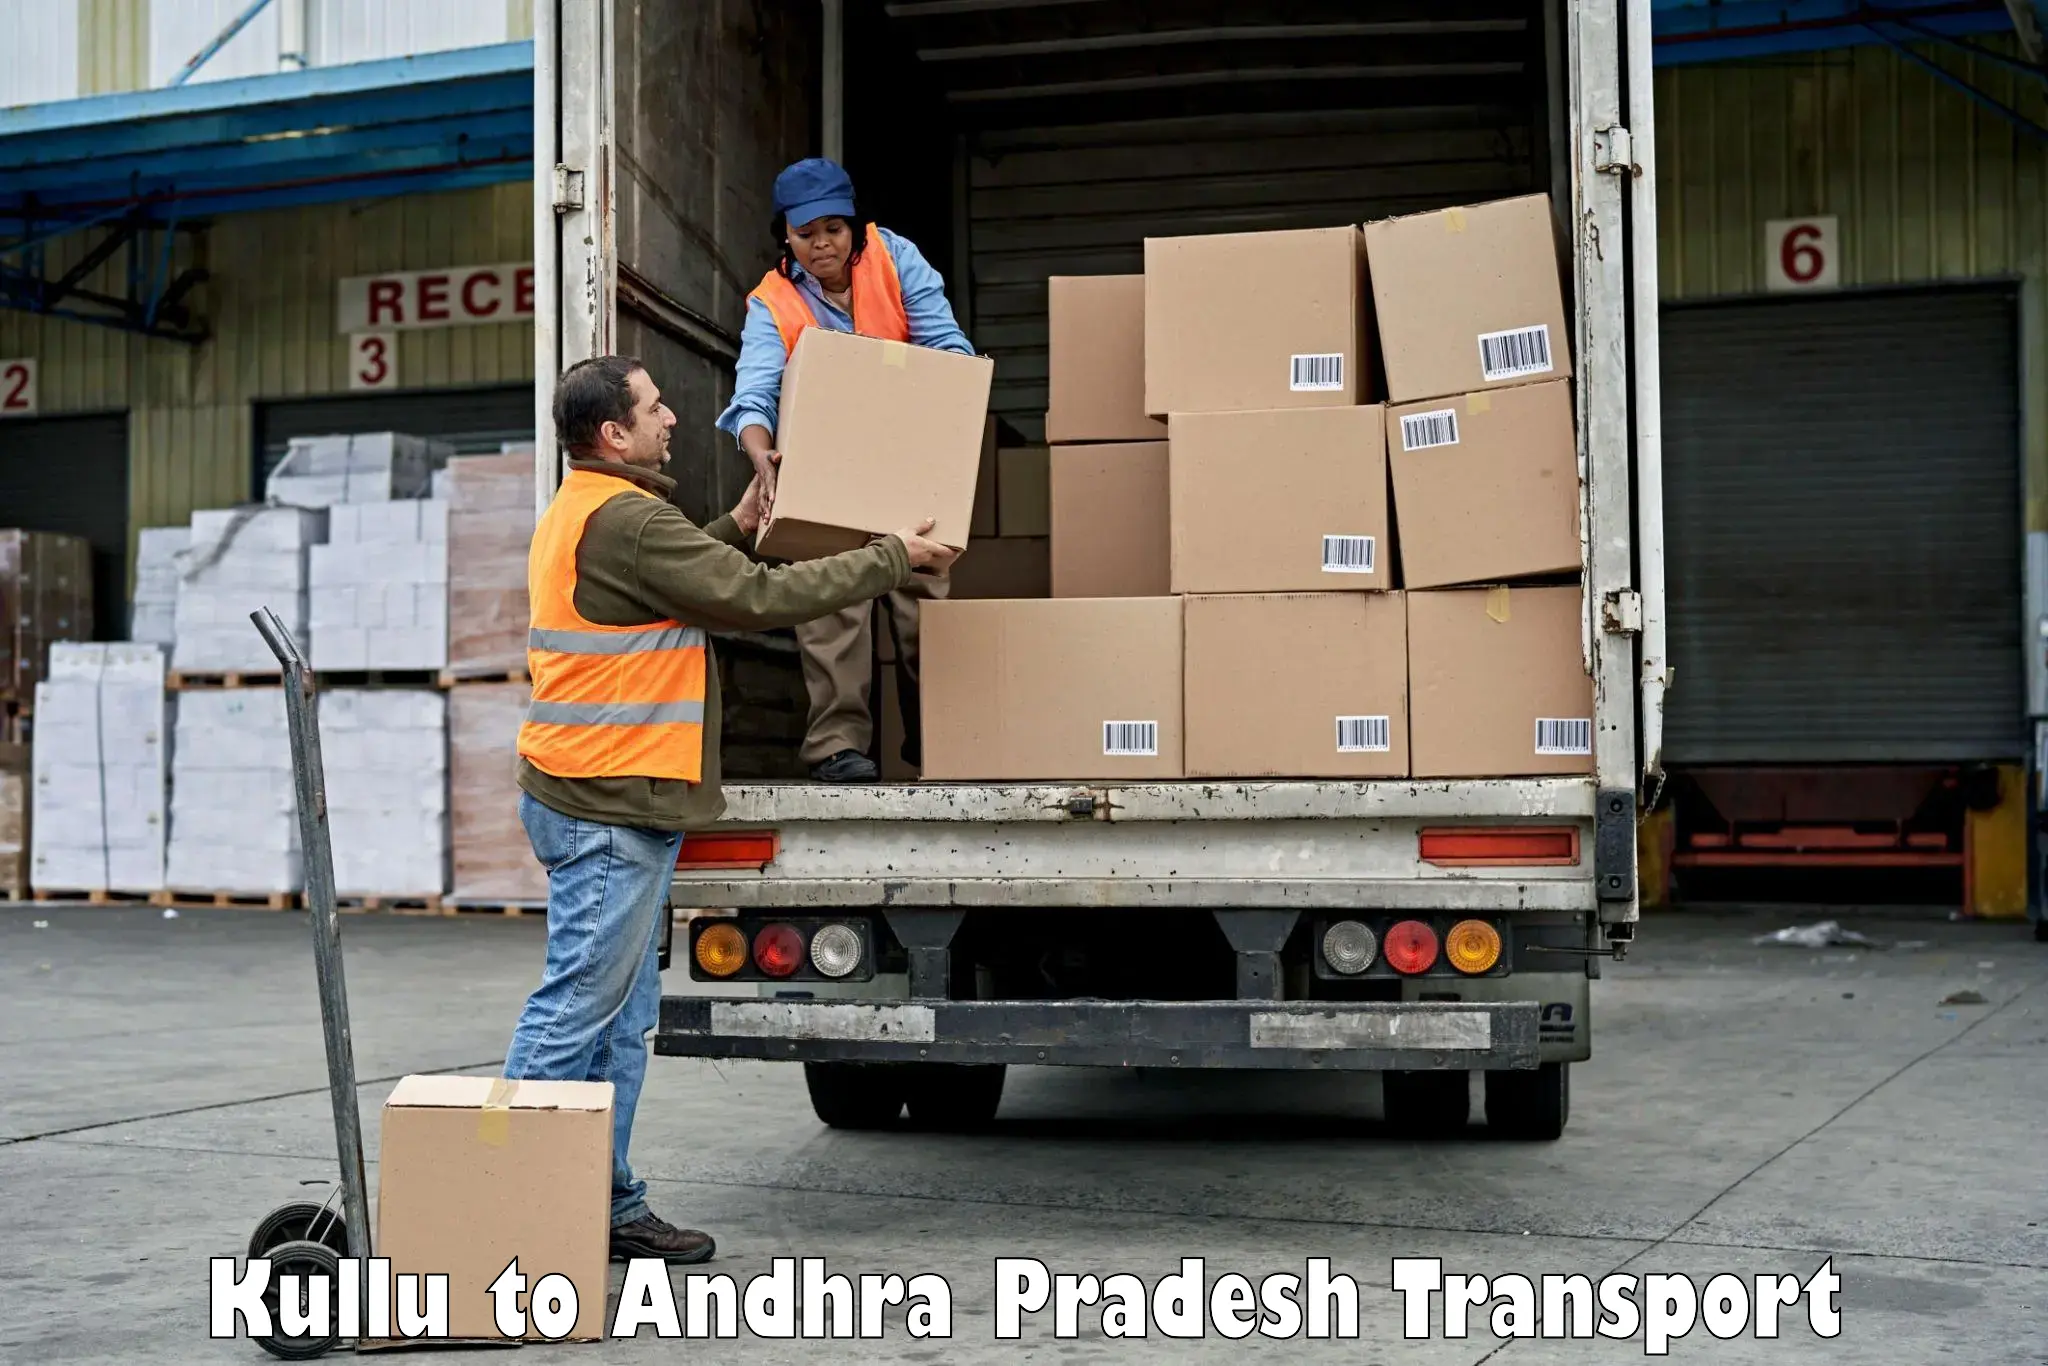 Goods delivery service Kullu to Waltair